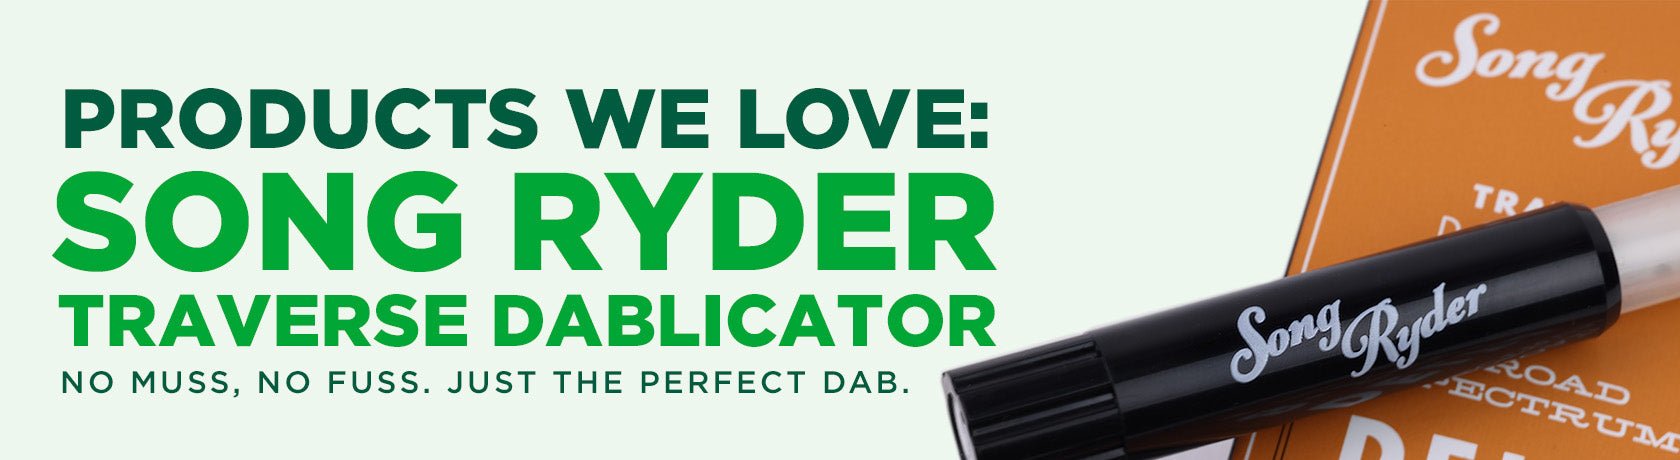 Products We Love: Song Ryder Traverse Dablicator - Shop CBD Kratom